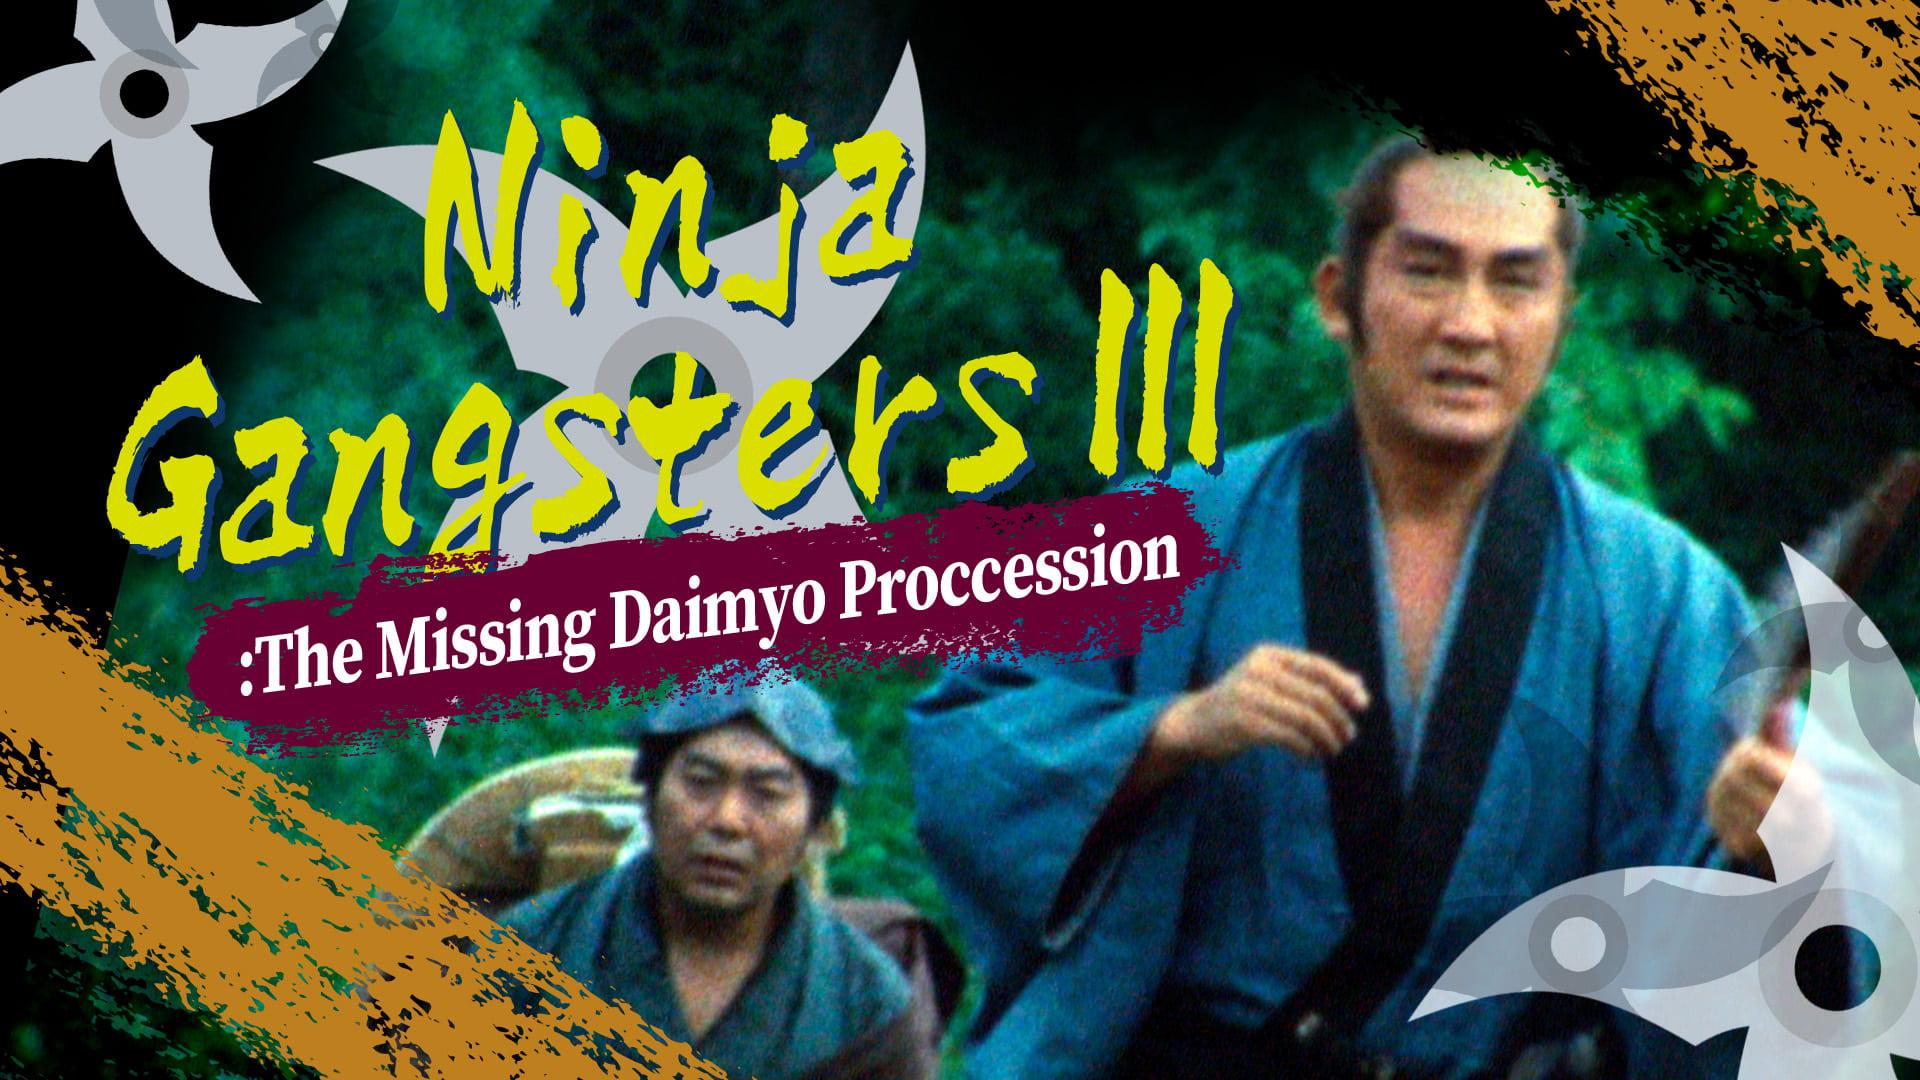 Ninja Gangsters III: The Missing Daimyo Procession backdrop